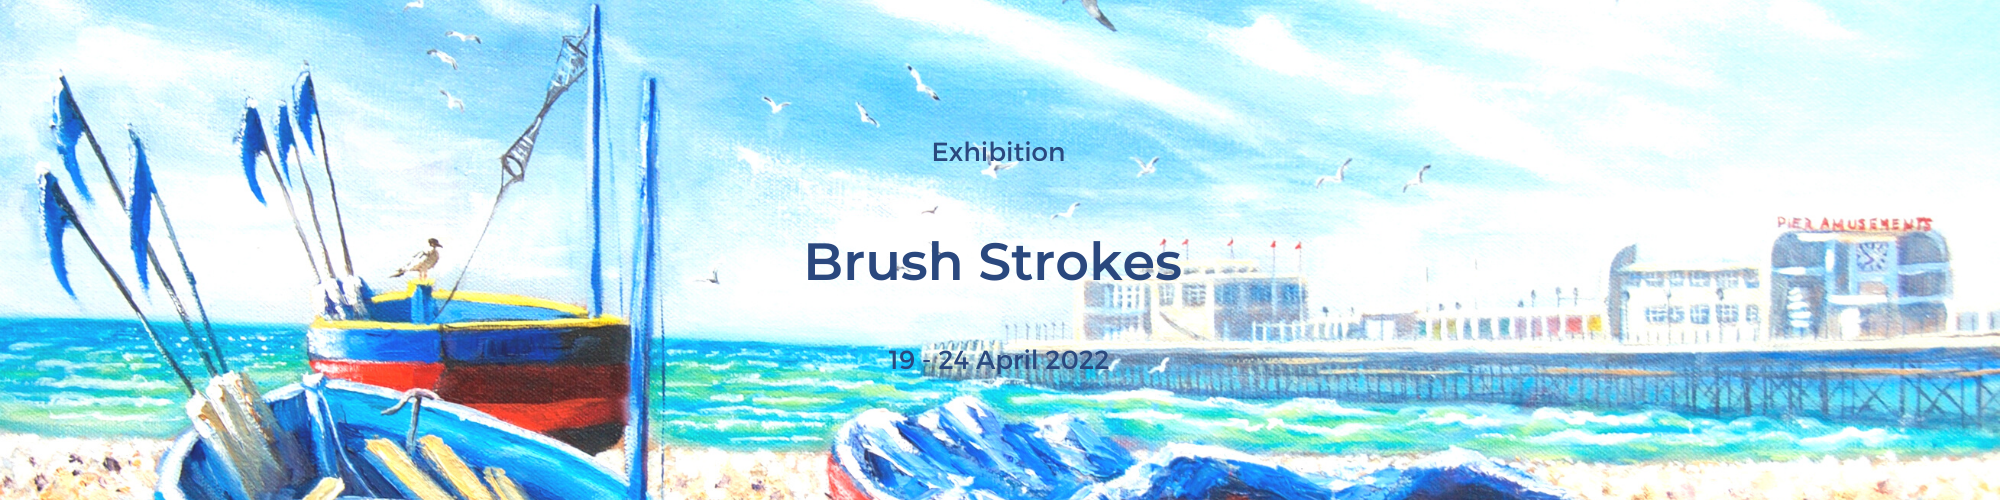 Brush Strokes Exhibition